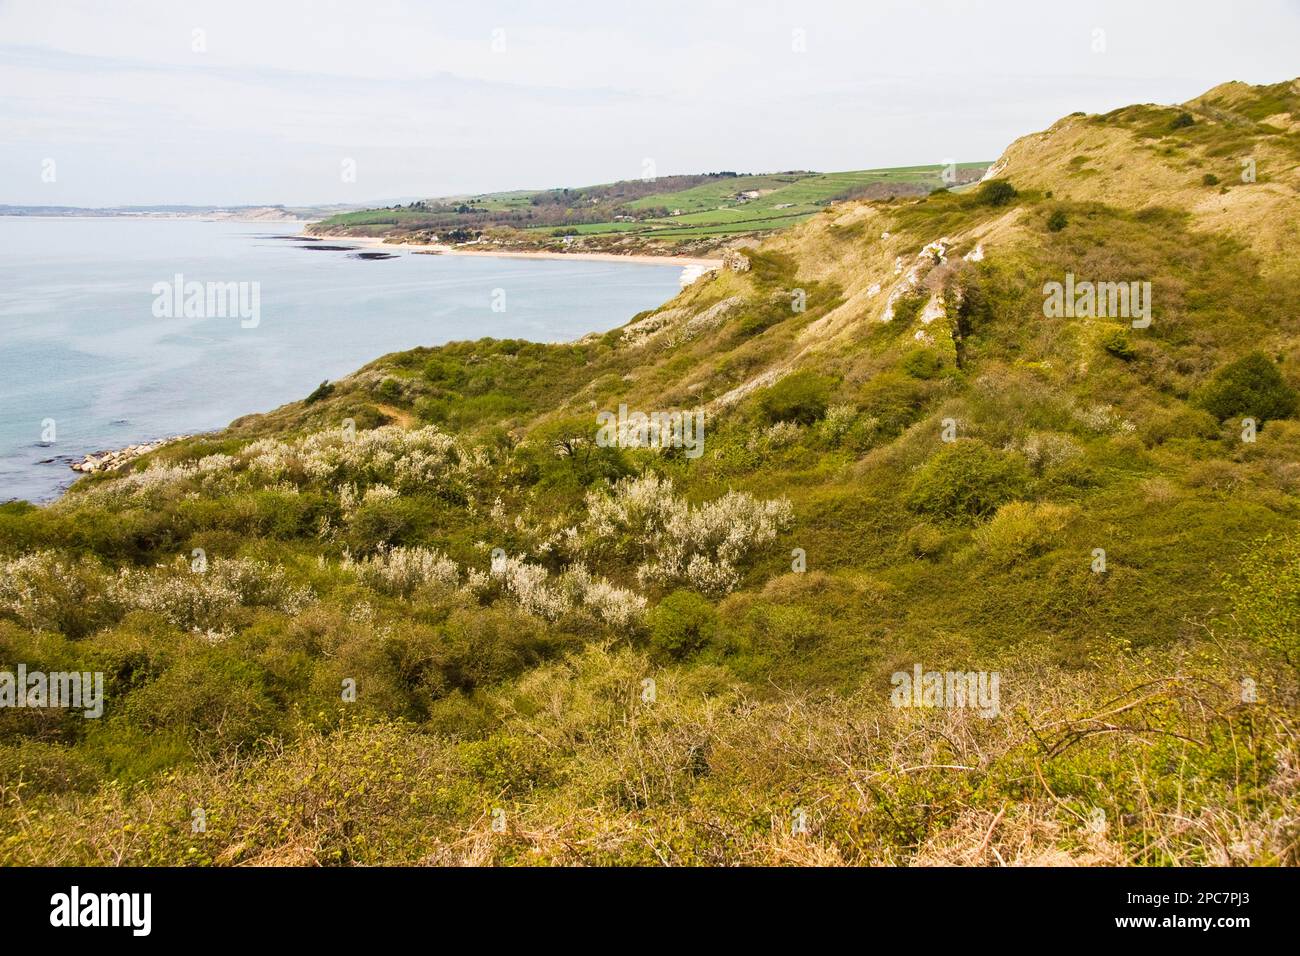 View of coastline, showing coastal scrub habitat, bay, beach, farmland and distant village, Dorset, England, United Kingdom Stock Photo